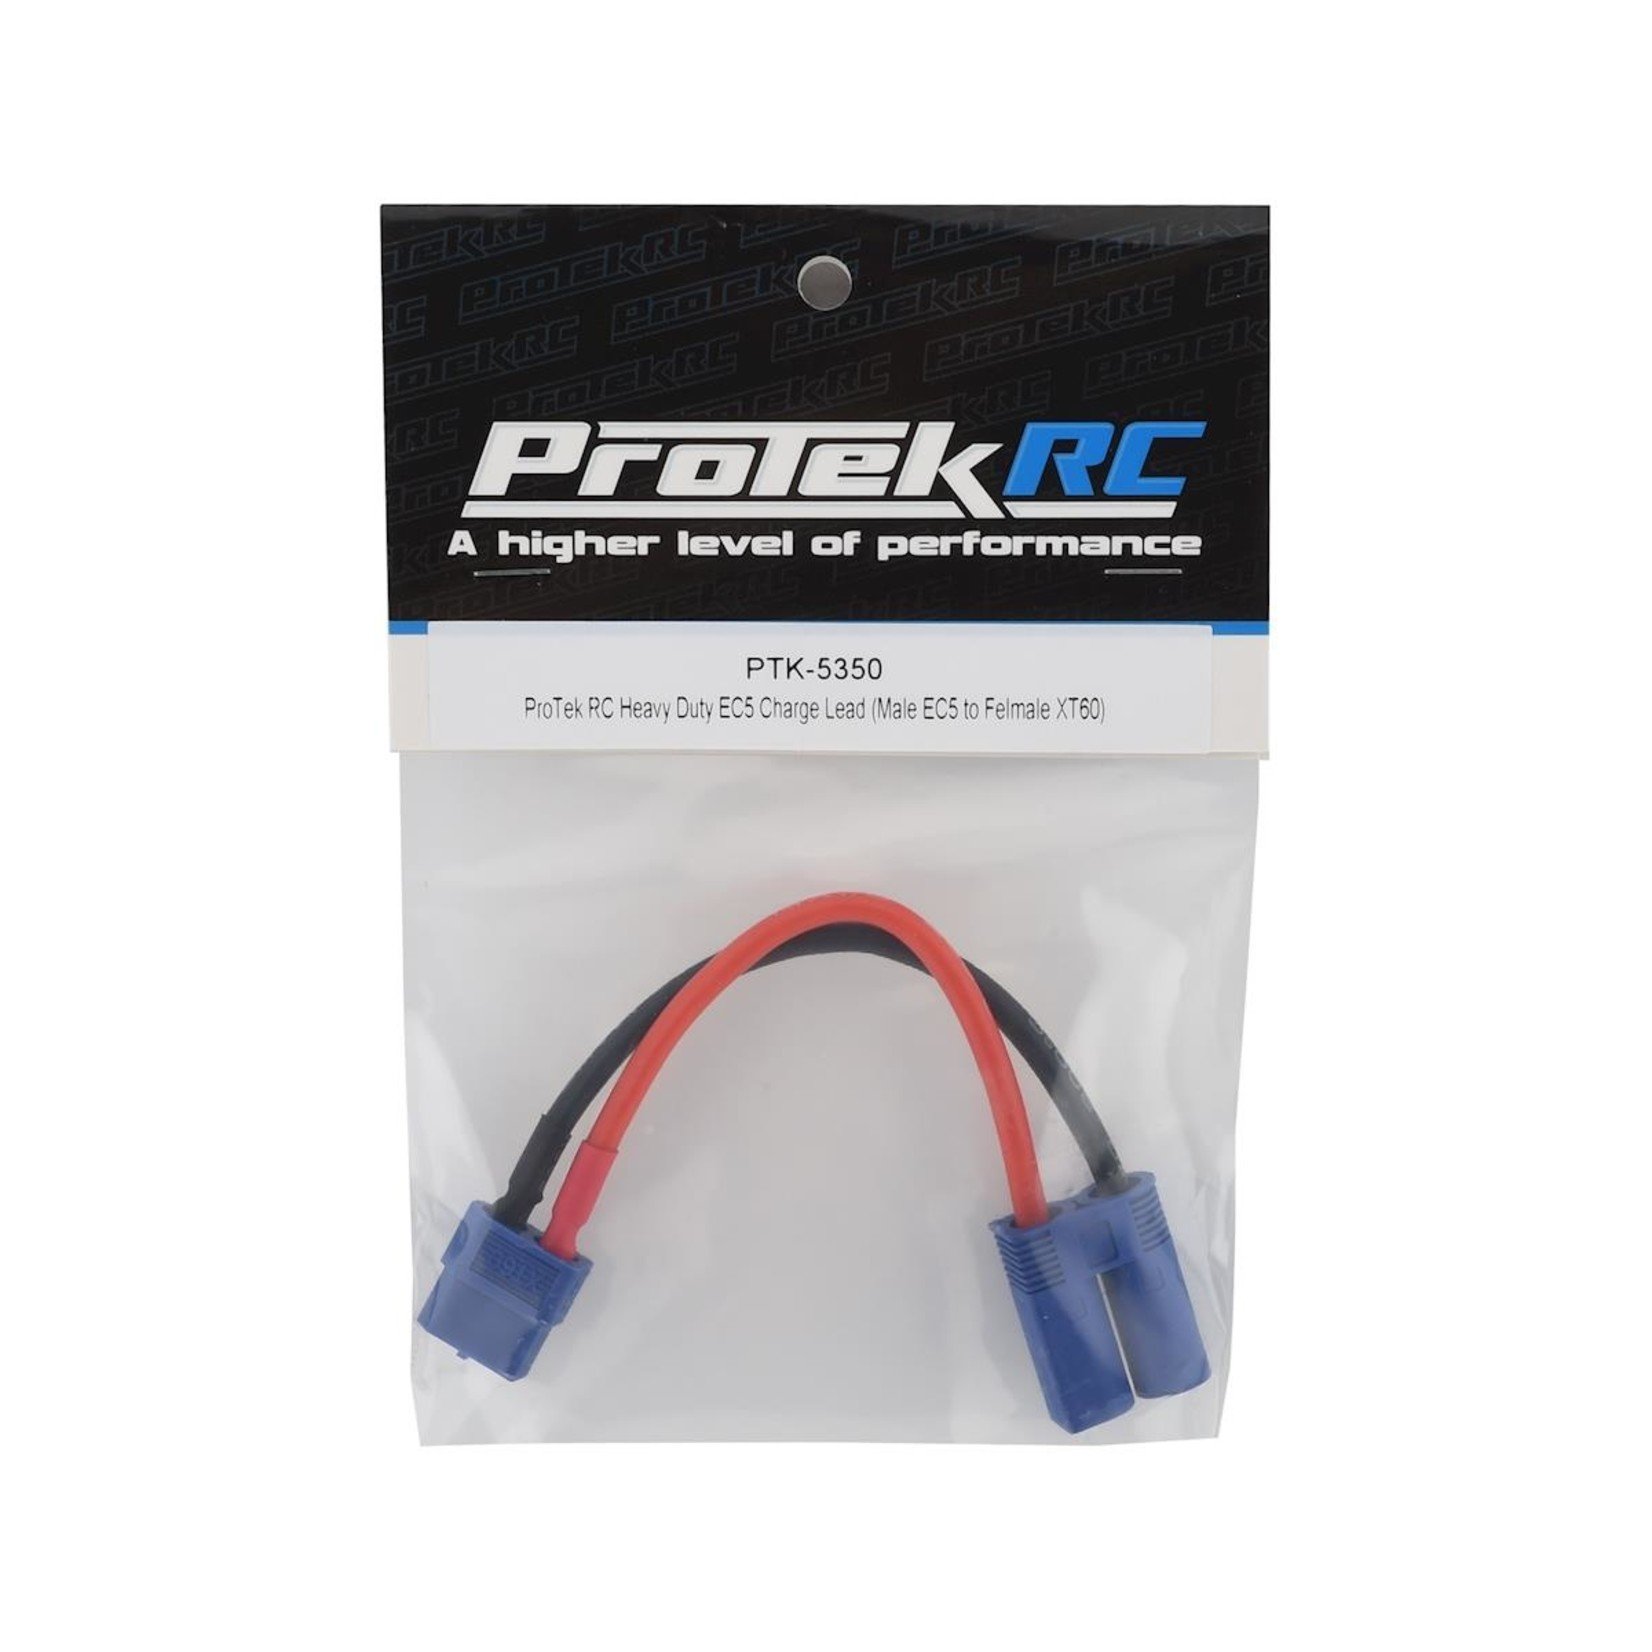 Protek R/C PTK-5350 ProTek RC Heavy Duty EC5 Charge Lead Adapter (Male EC5 to Female XT60)